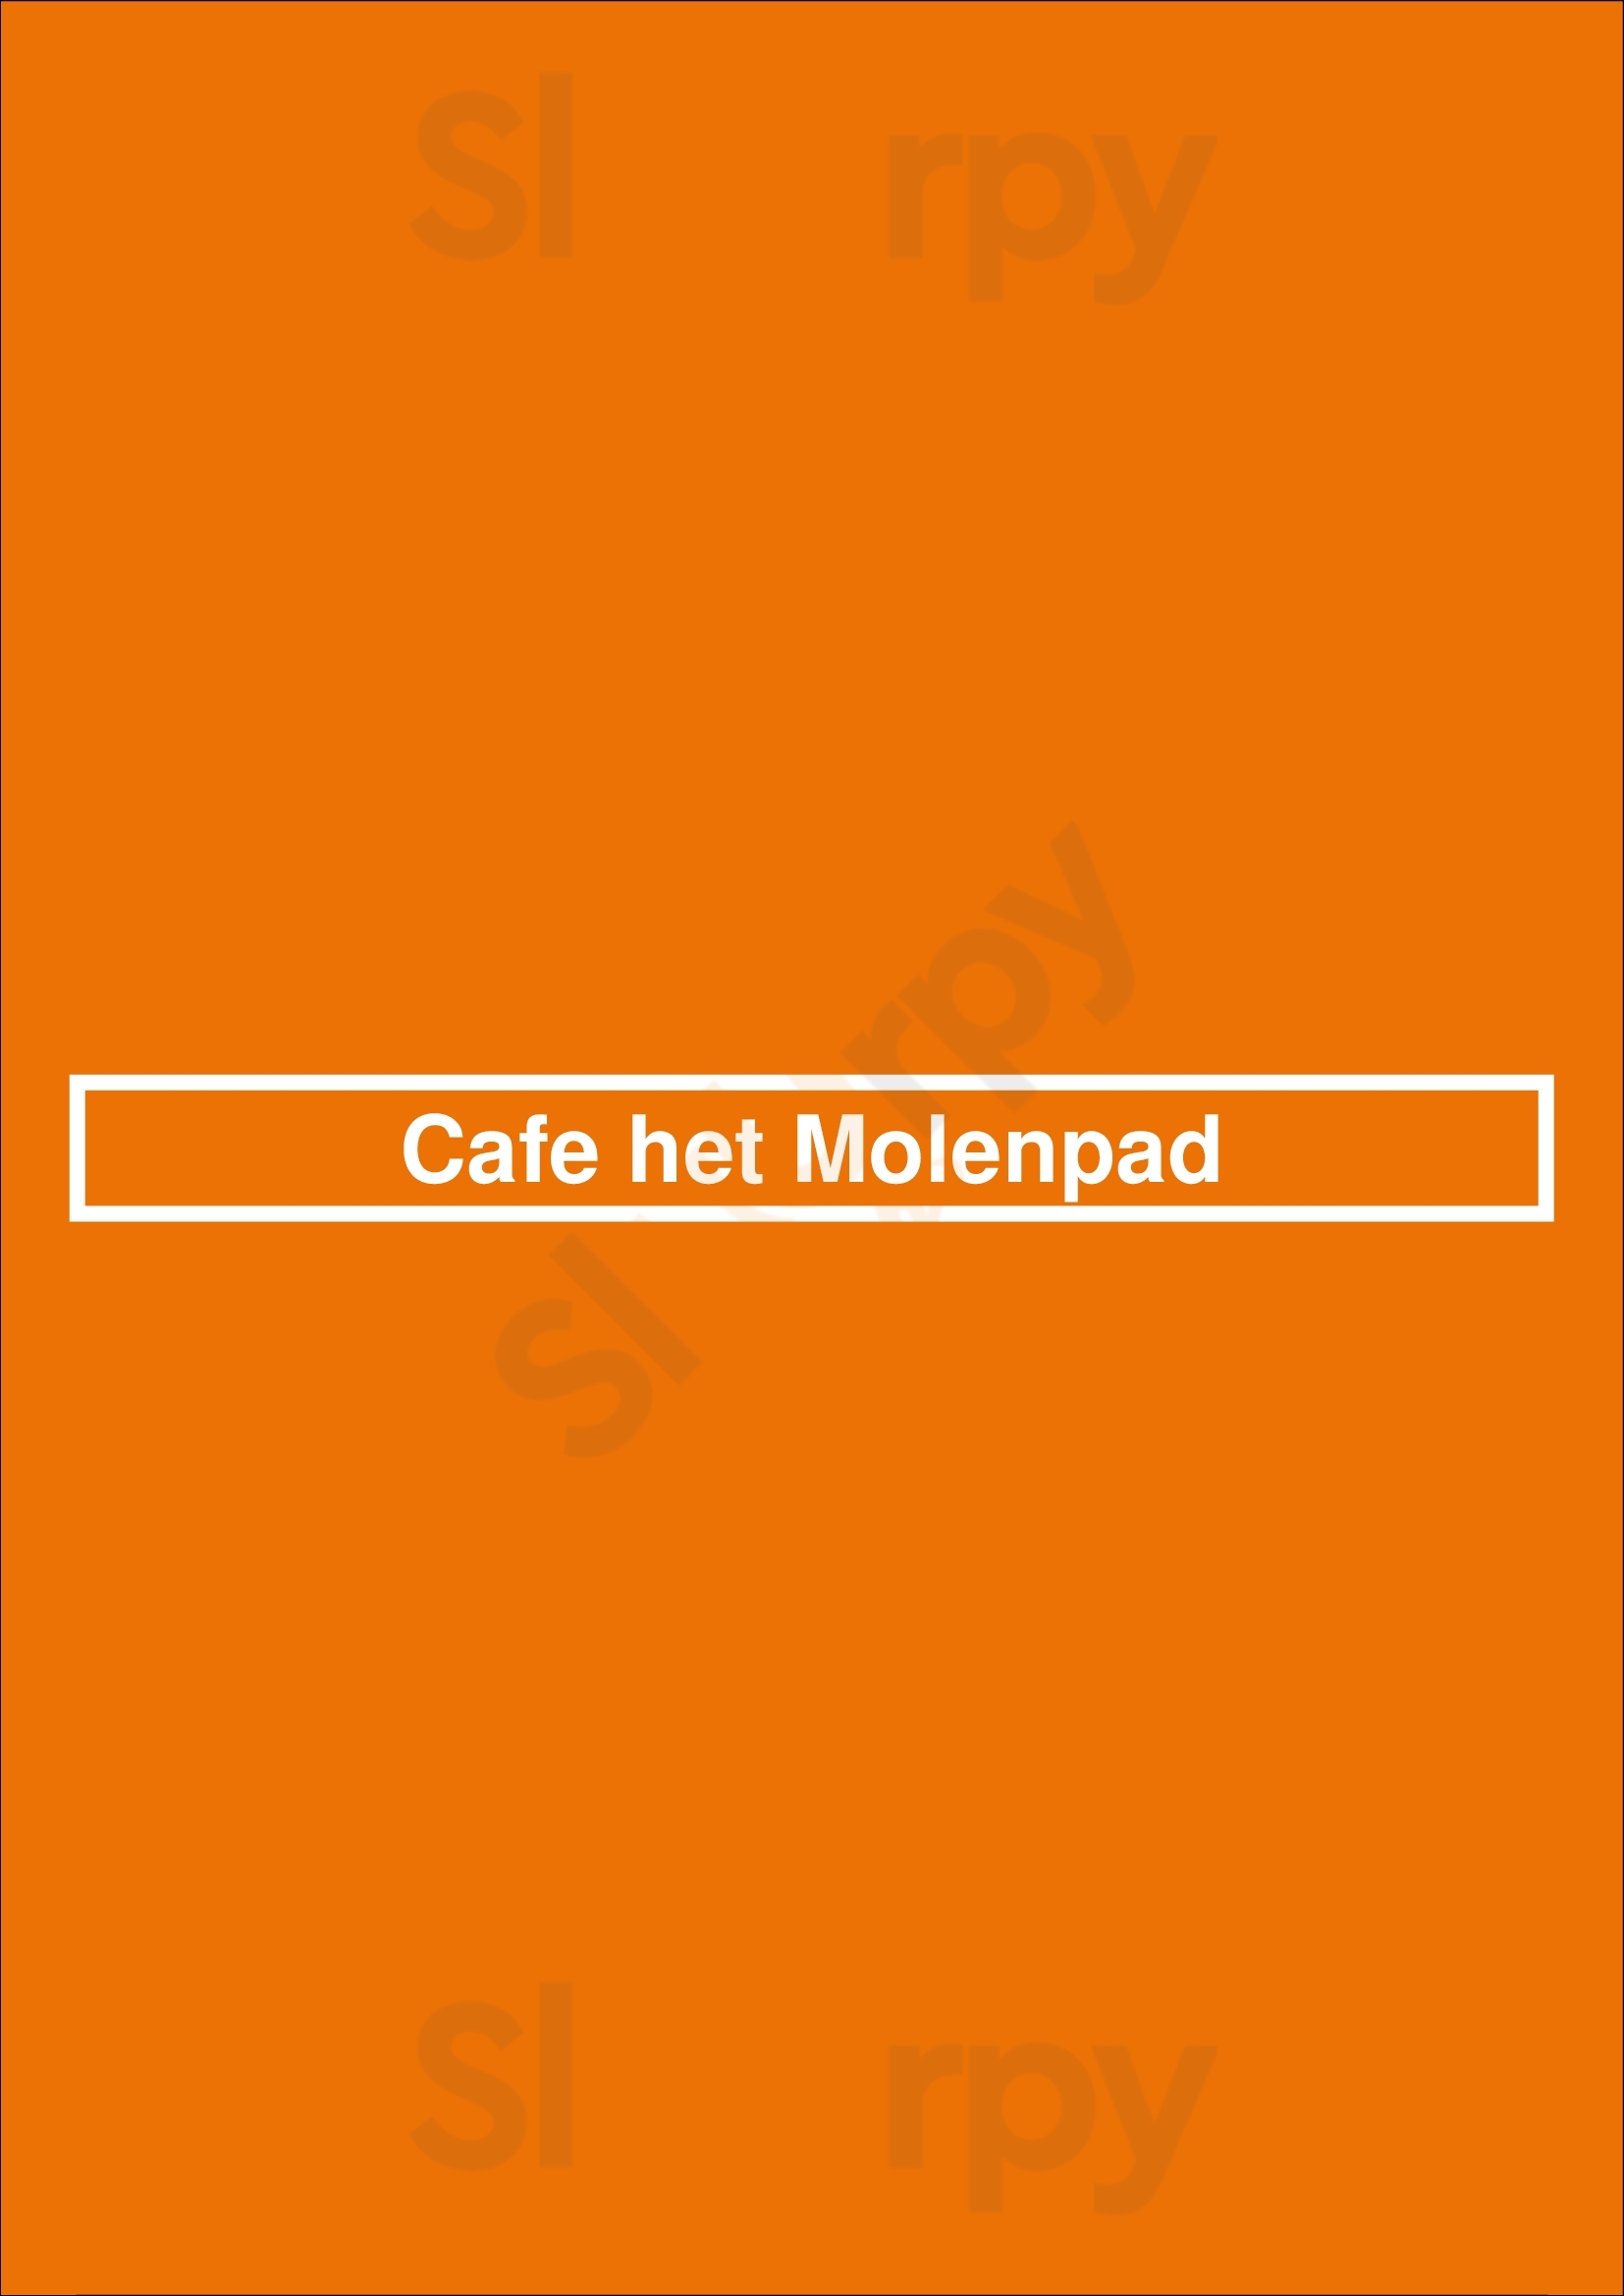 Cafe Het Molenpad Amsterdam Menu - 1